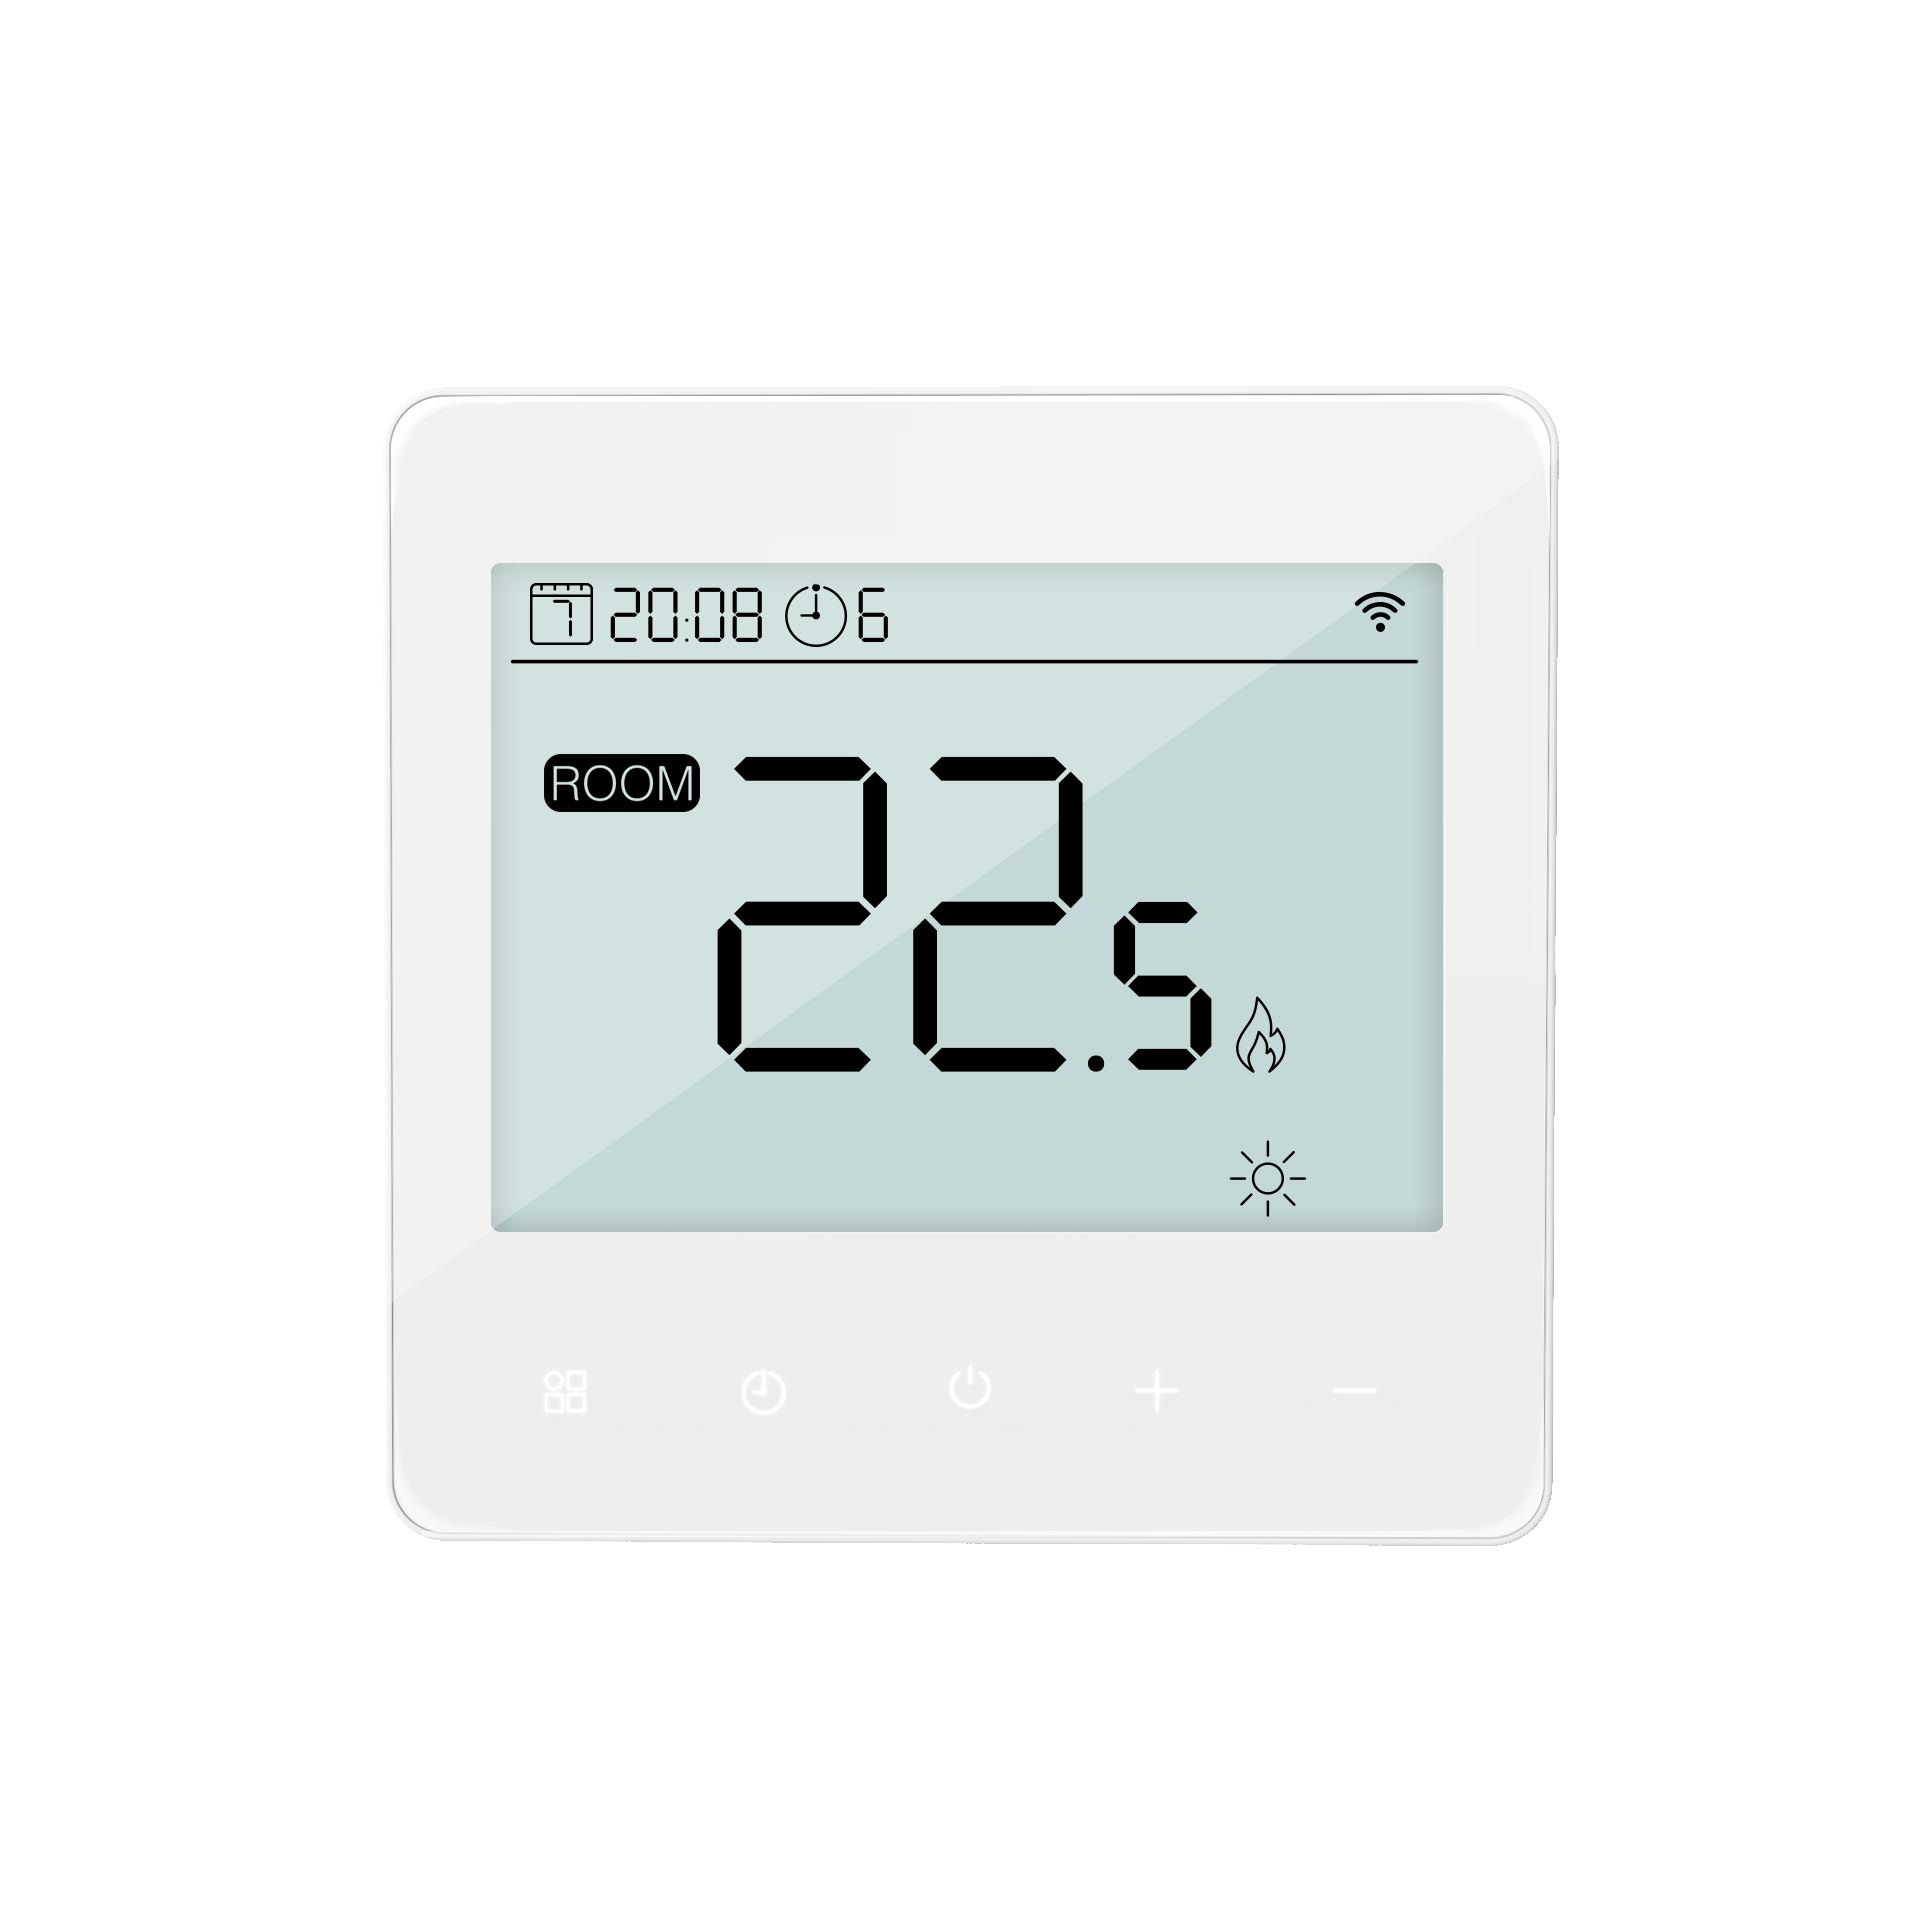 Energy-Saving heat pump smart thermostat